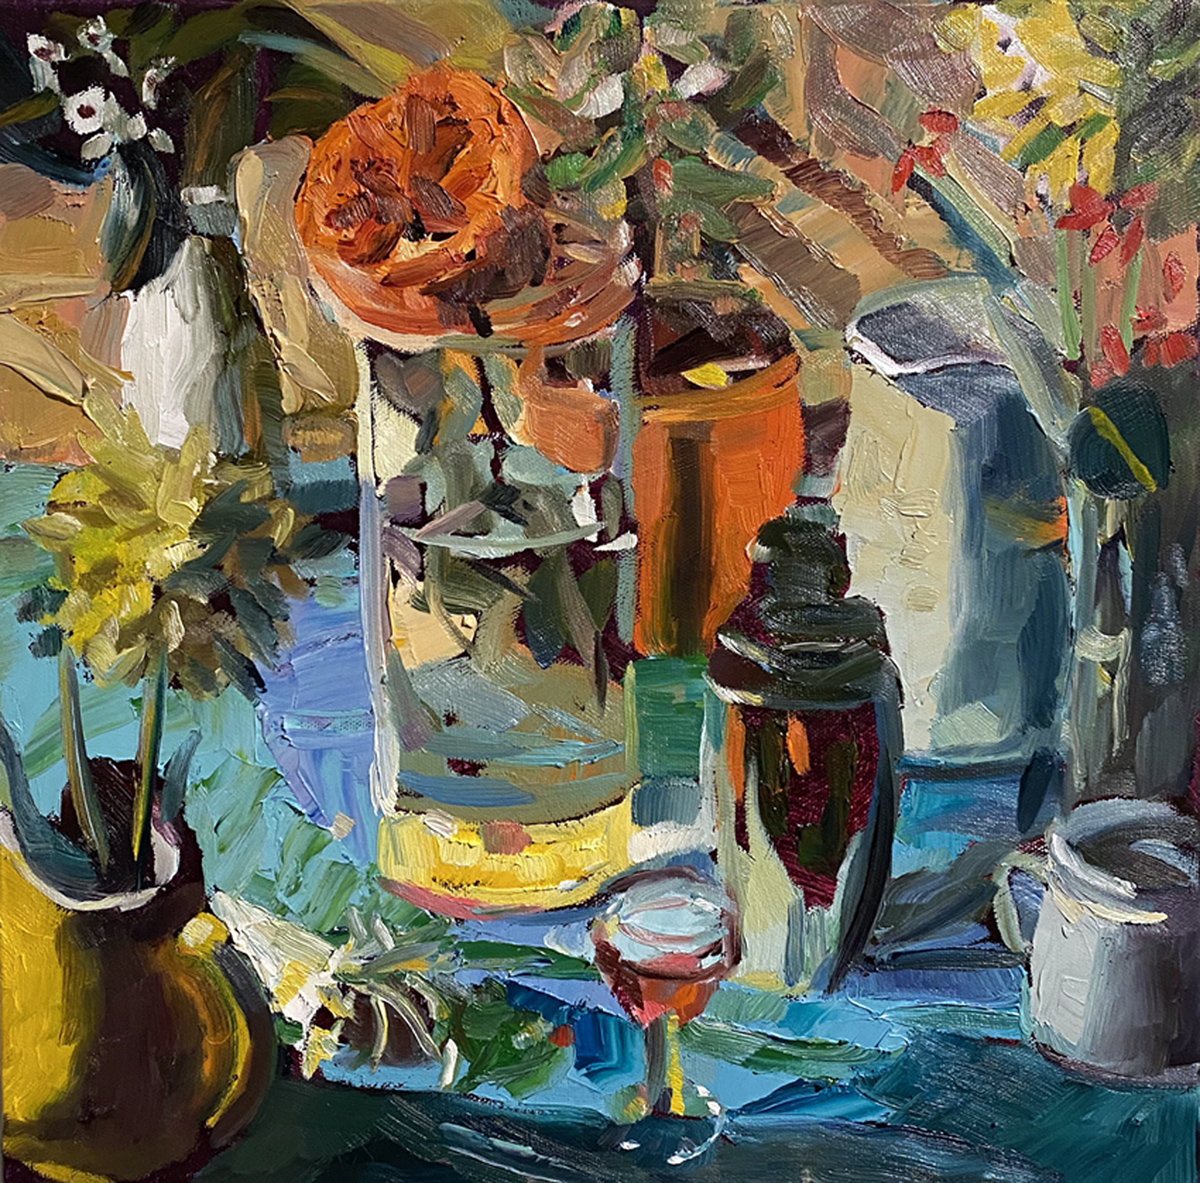 Rosemary Valadon 'Studio Table' oil on canvas 40 x 40cm